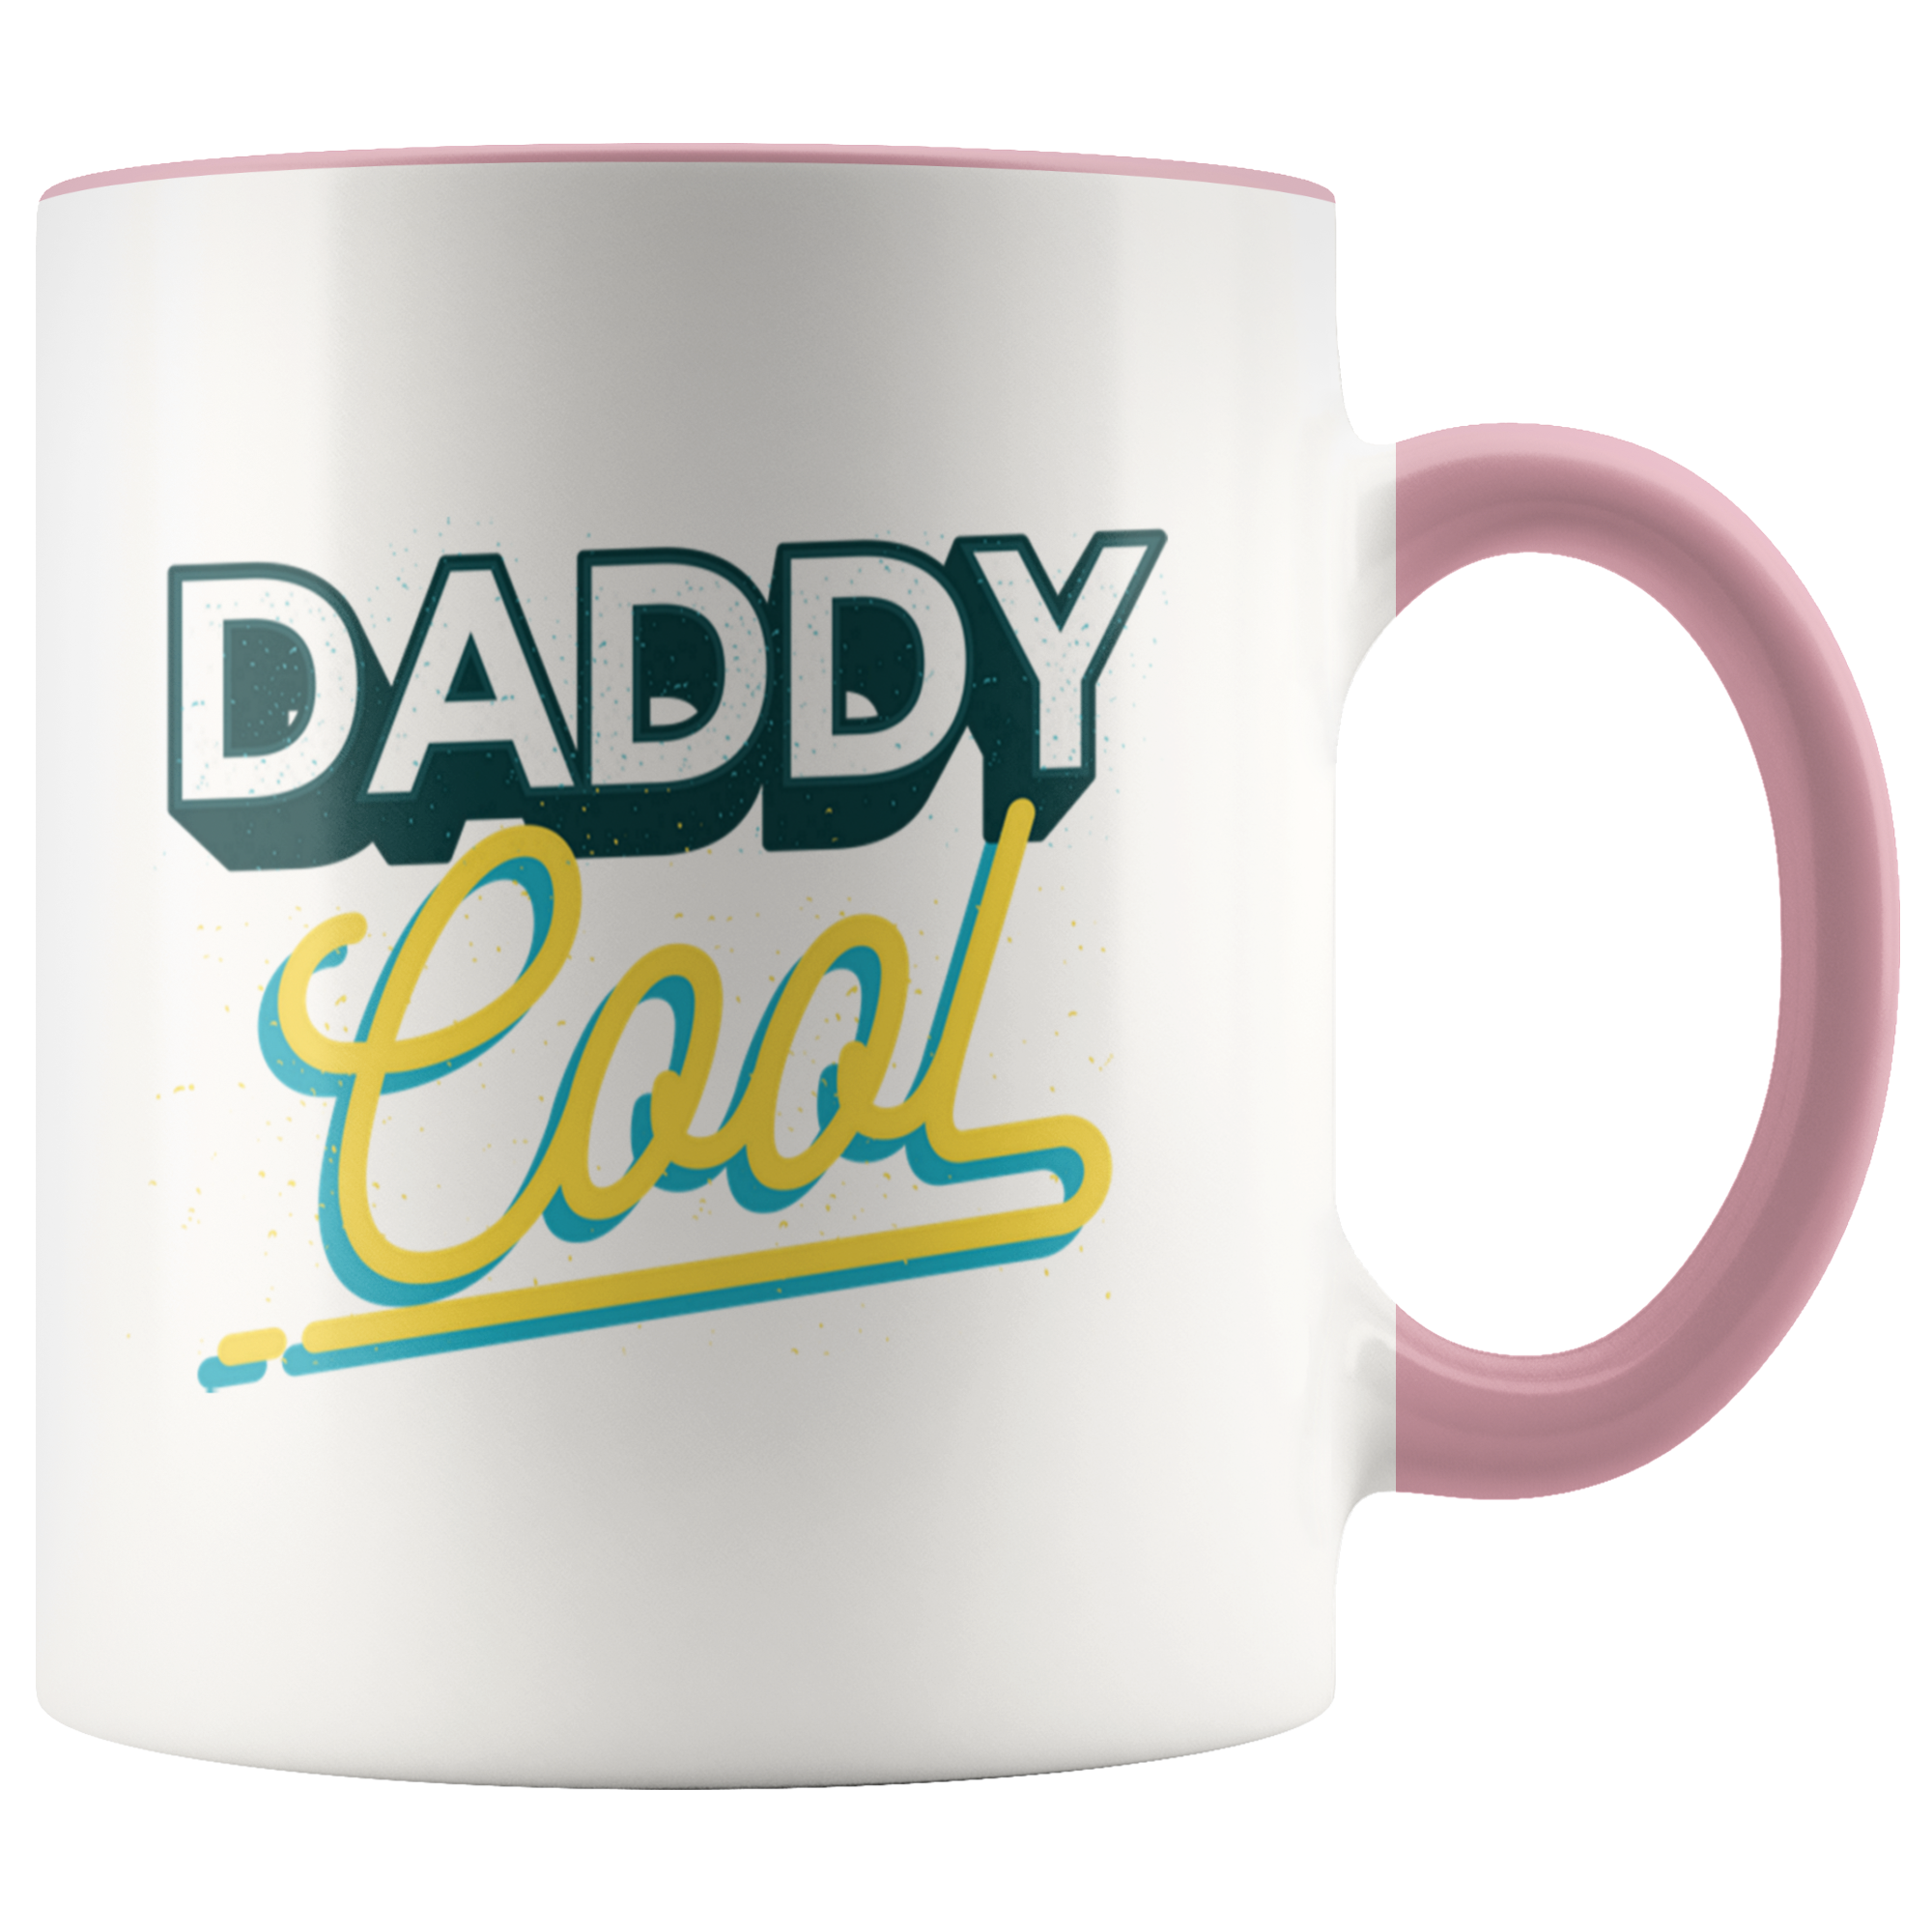 Daddy Cool Mug